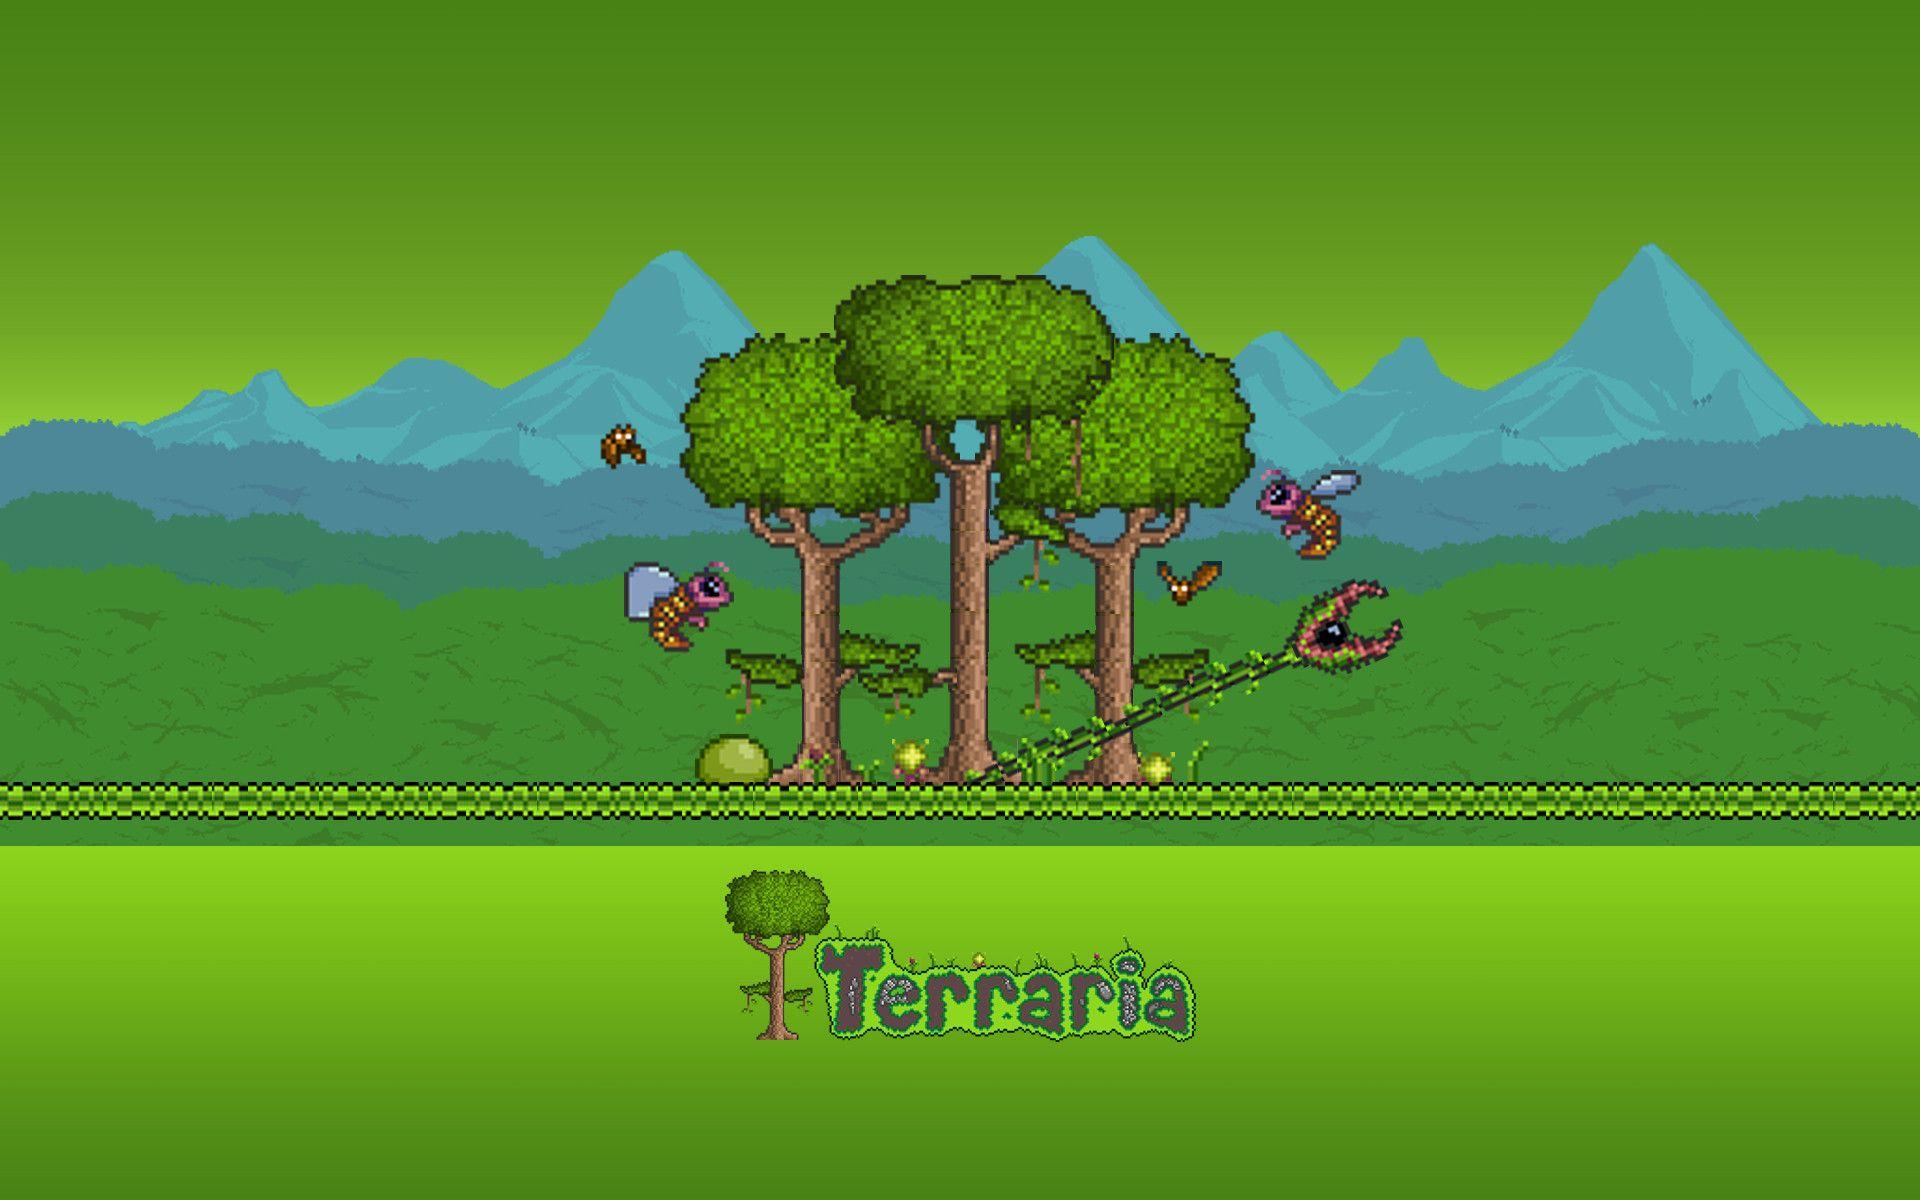 terraria free download pc 2018